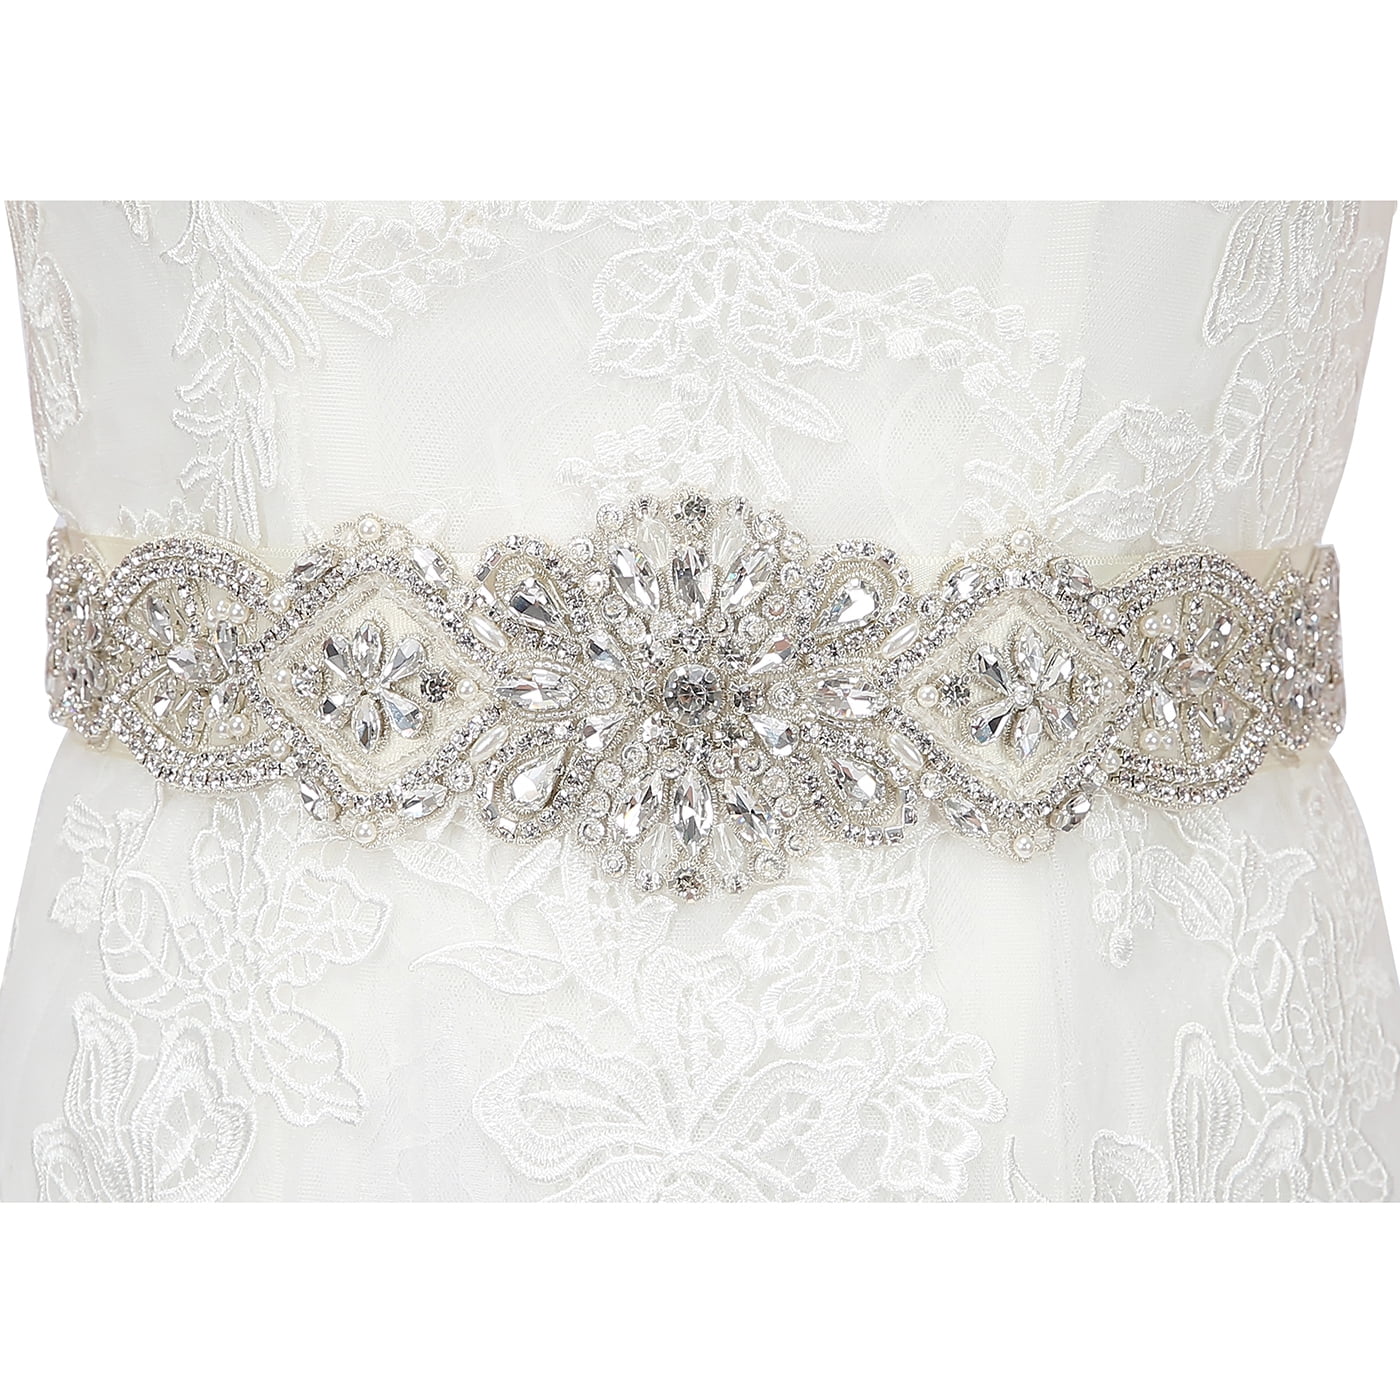 wedding dress belts